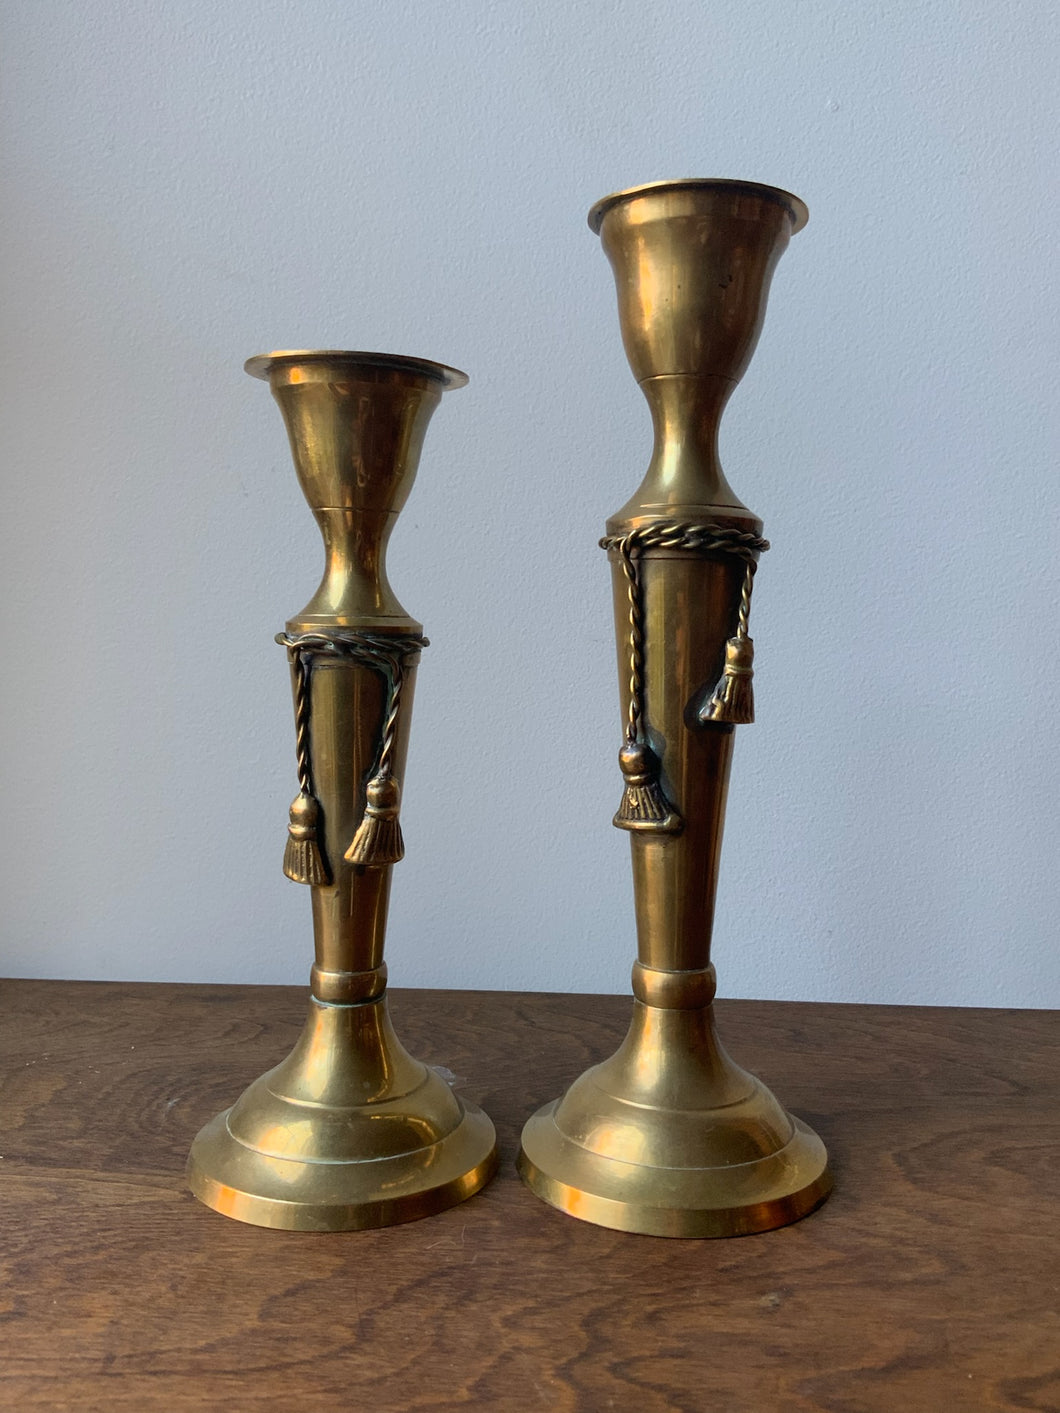 Beautiful Pair of Vintage Brass Candle Holders Tassel Details